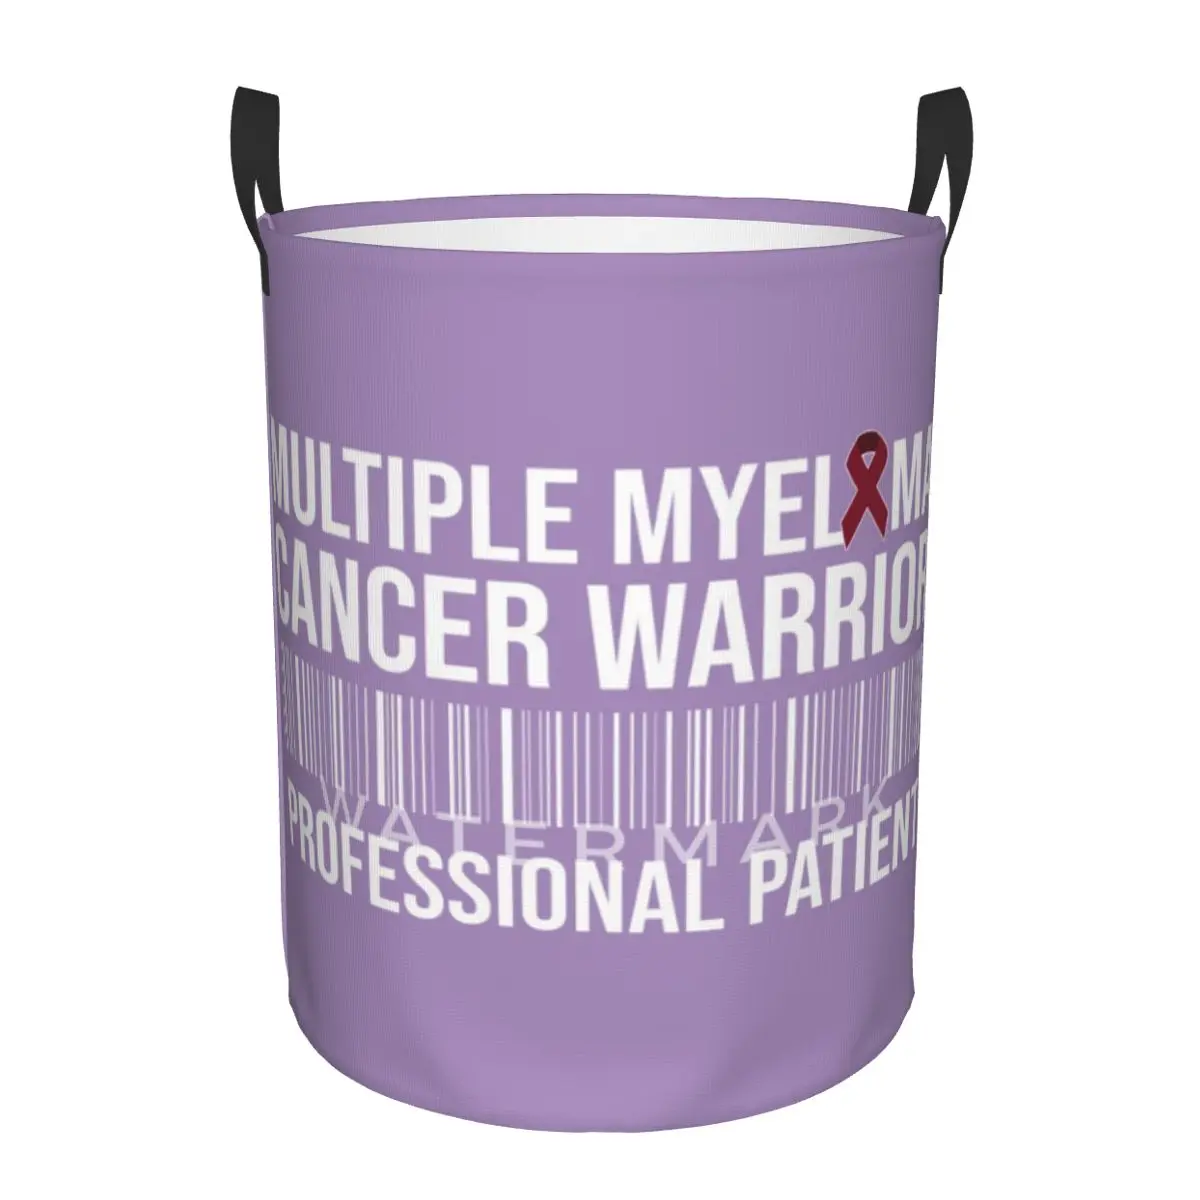 

Multiple Myeloma Cancer Survivor Patient Warrior Circular hamper,Storage Basket Waterproof bathrooms books